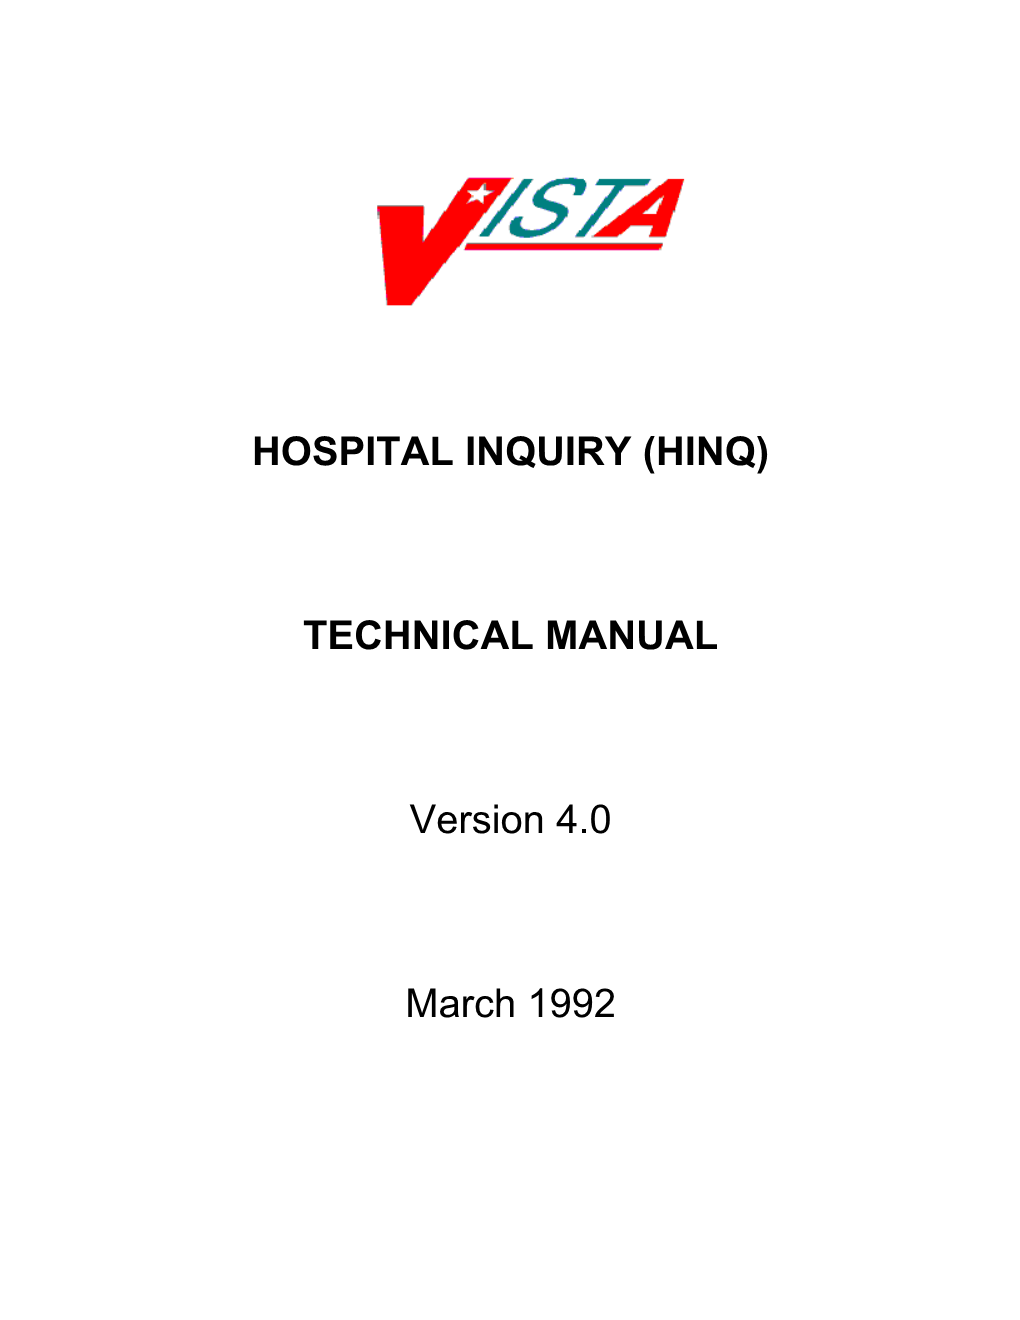 Hinq V4.0 Technical Manual